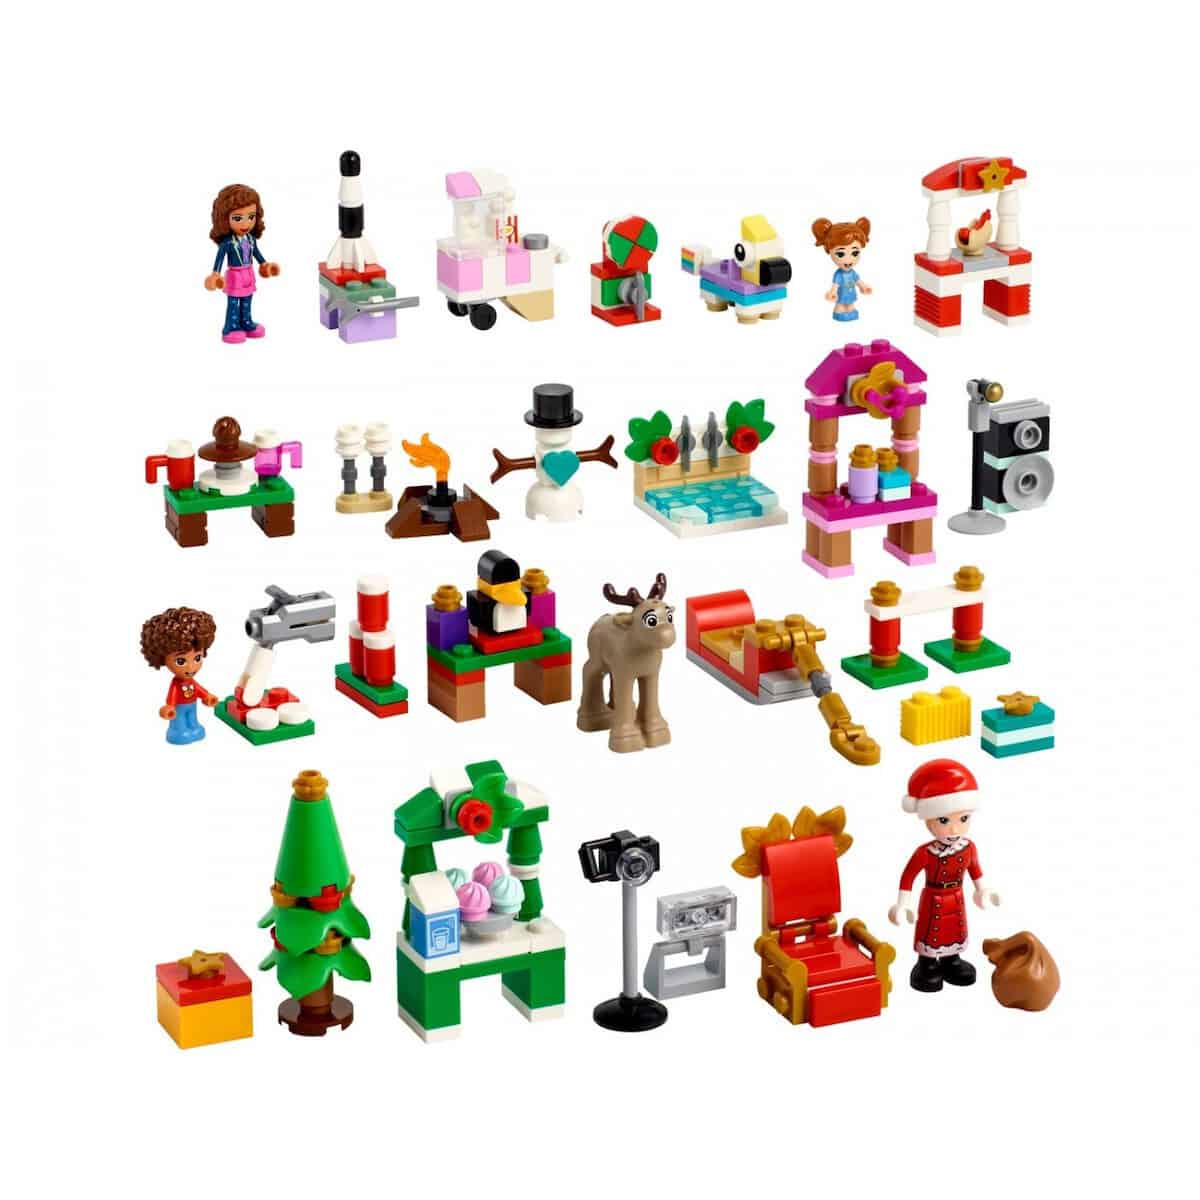 Lego Friends - Advent Calendar